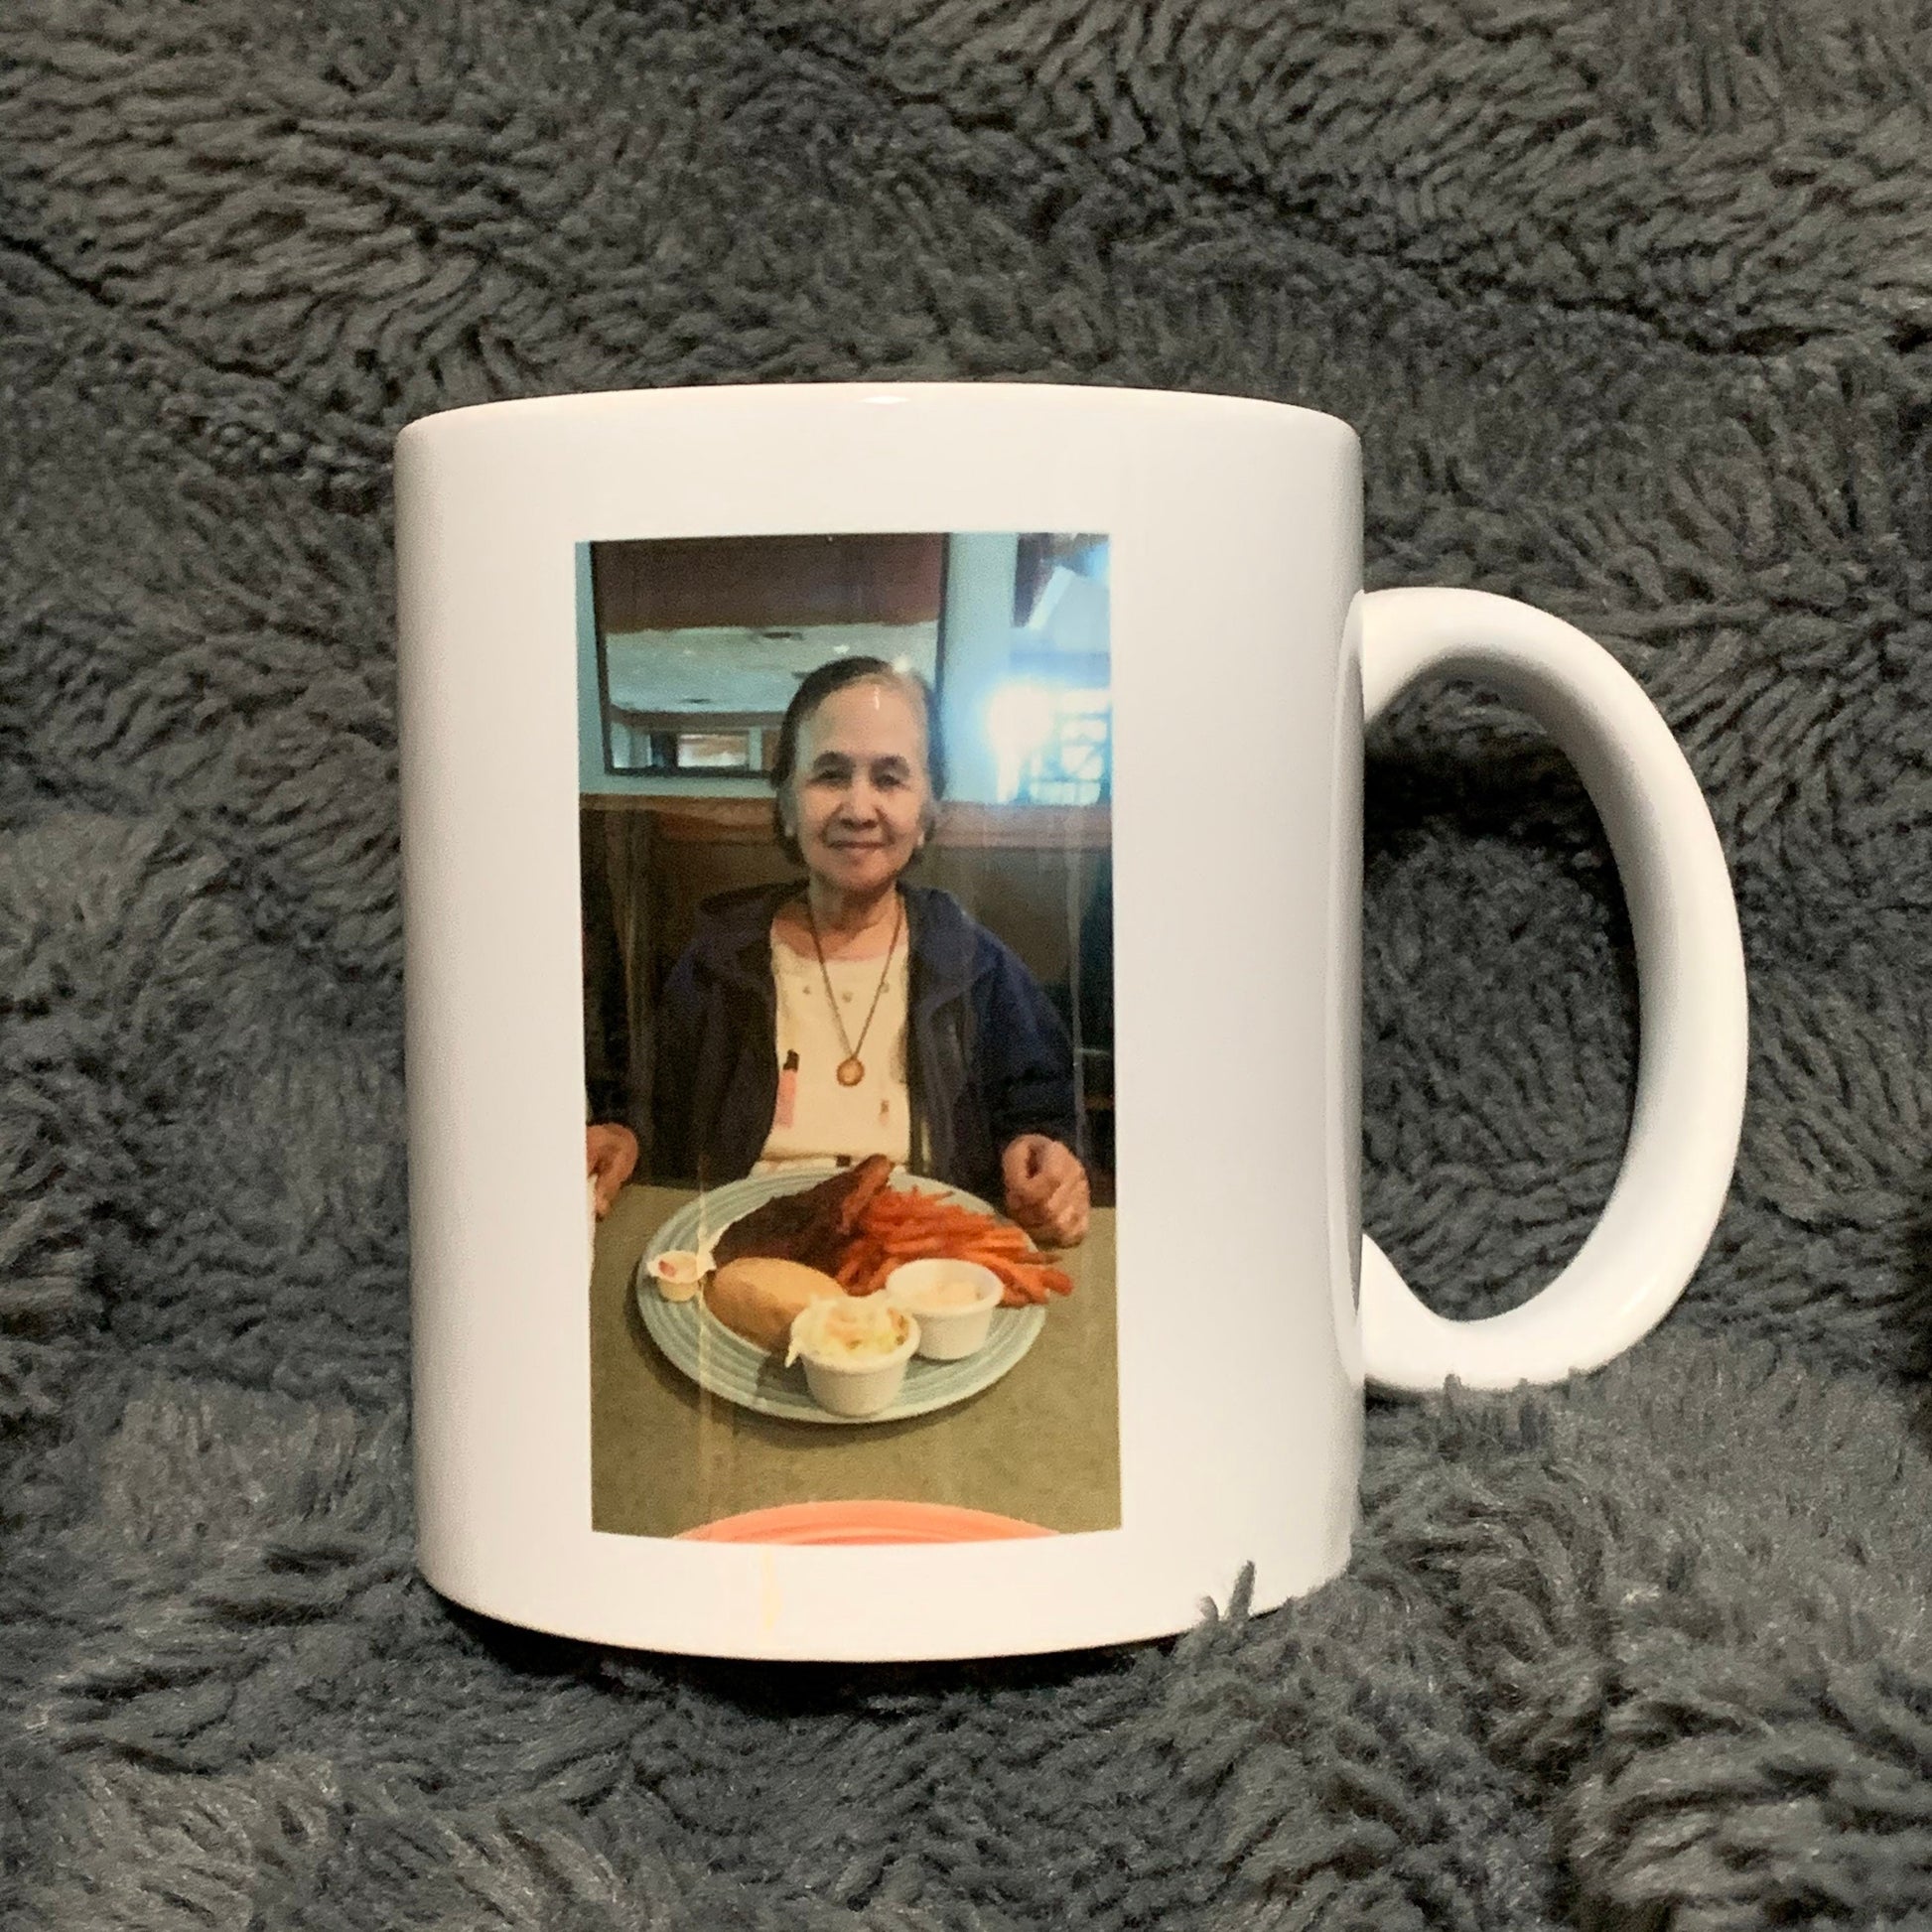 Personalized Photo Collage Coffee Mug Gift for Mom, Custom Photo Mug - 11 oz.